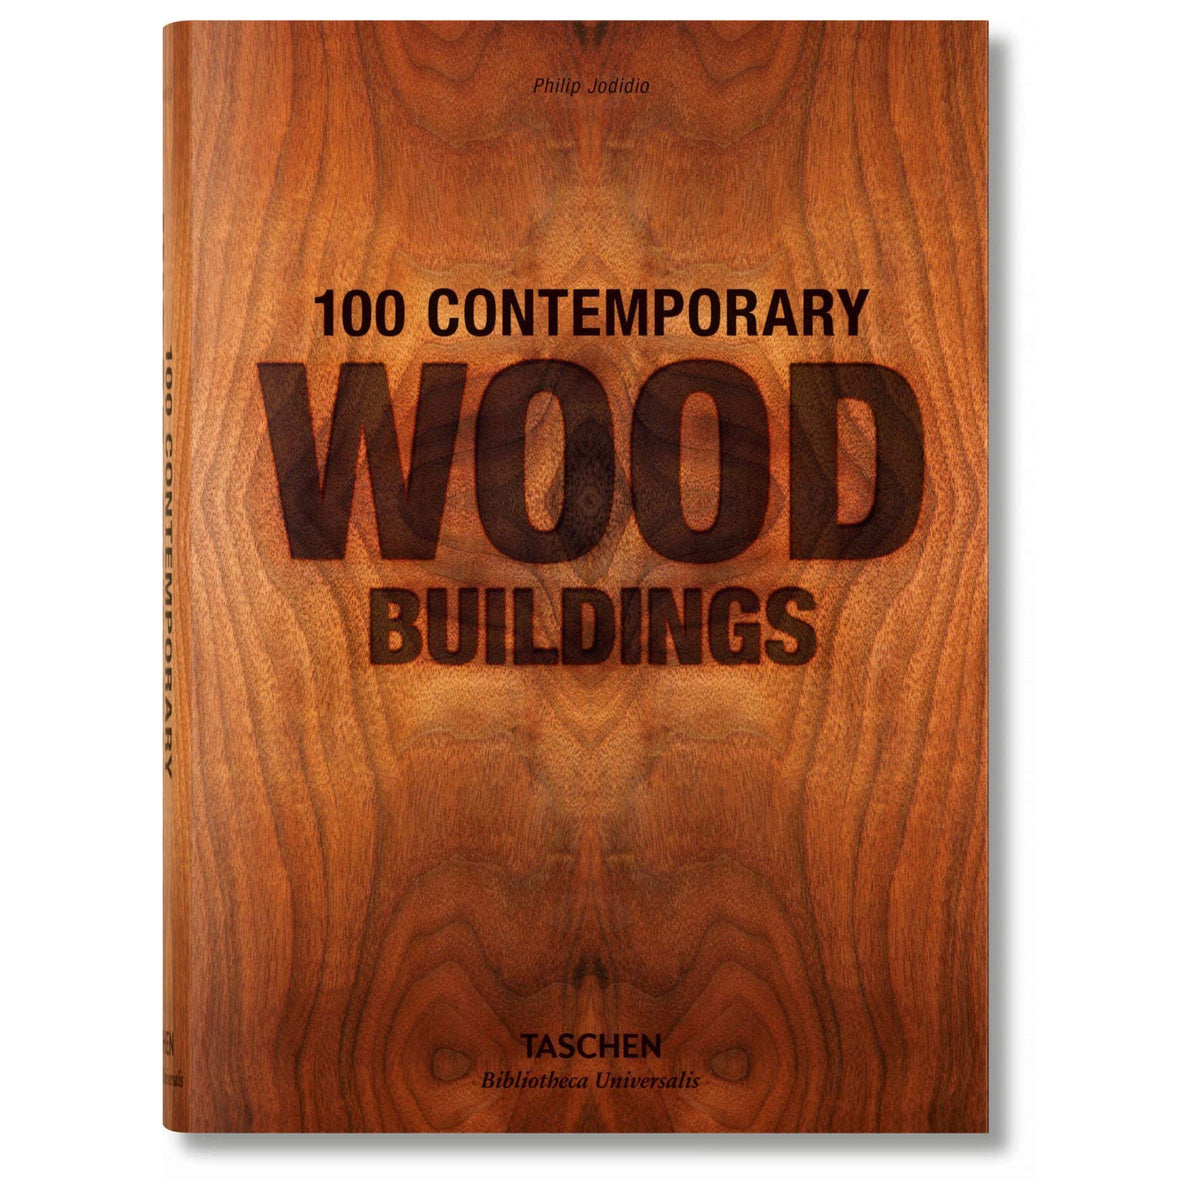 100 Contemporary Wooden Buildings